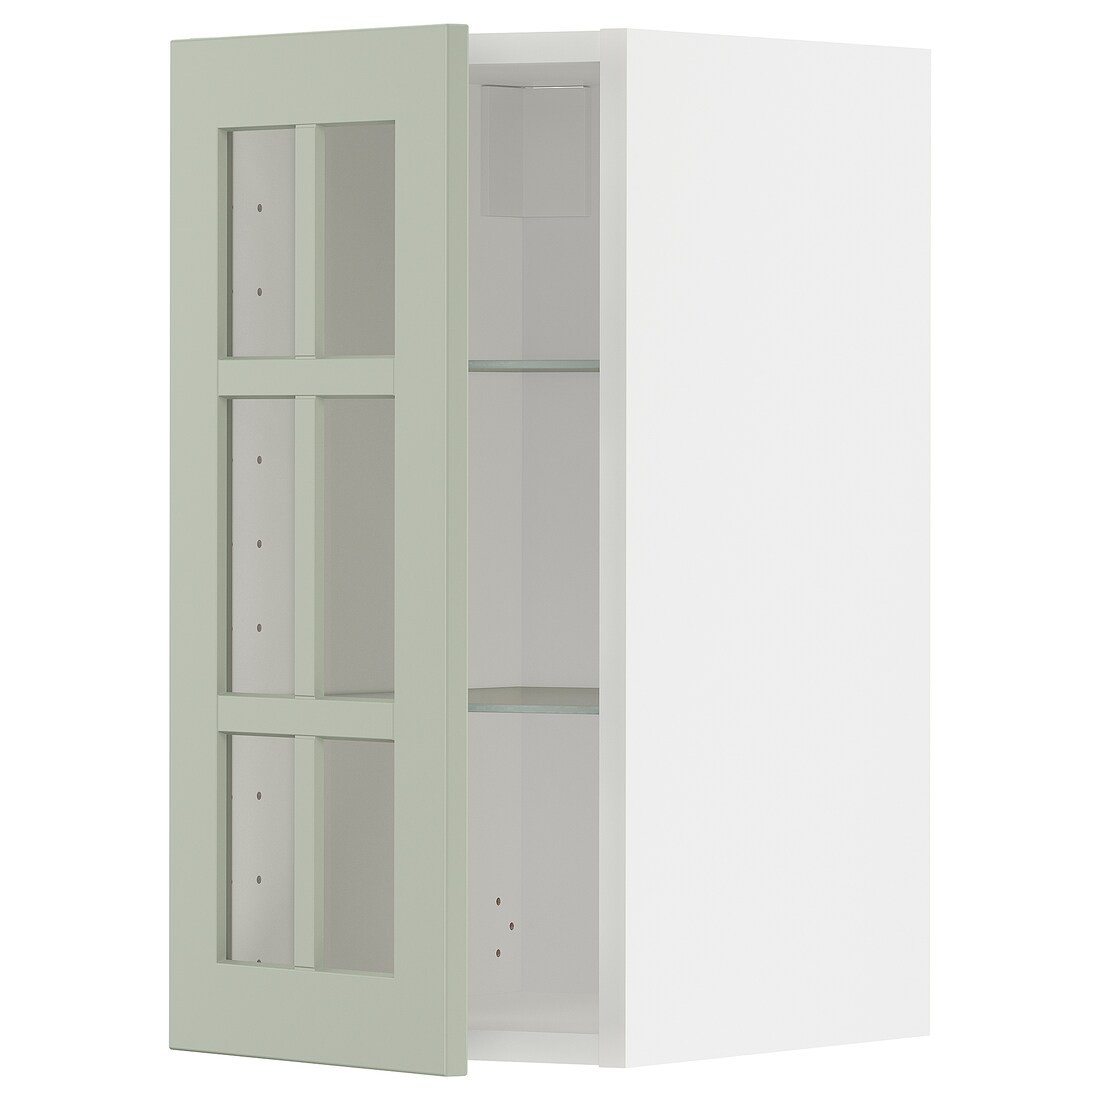 METOD МЕТОД Навесной шкаф, белый / Stensund светло-зеленый, 30x60 см